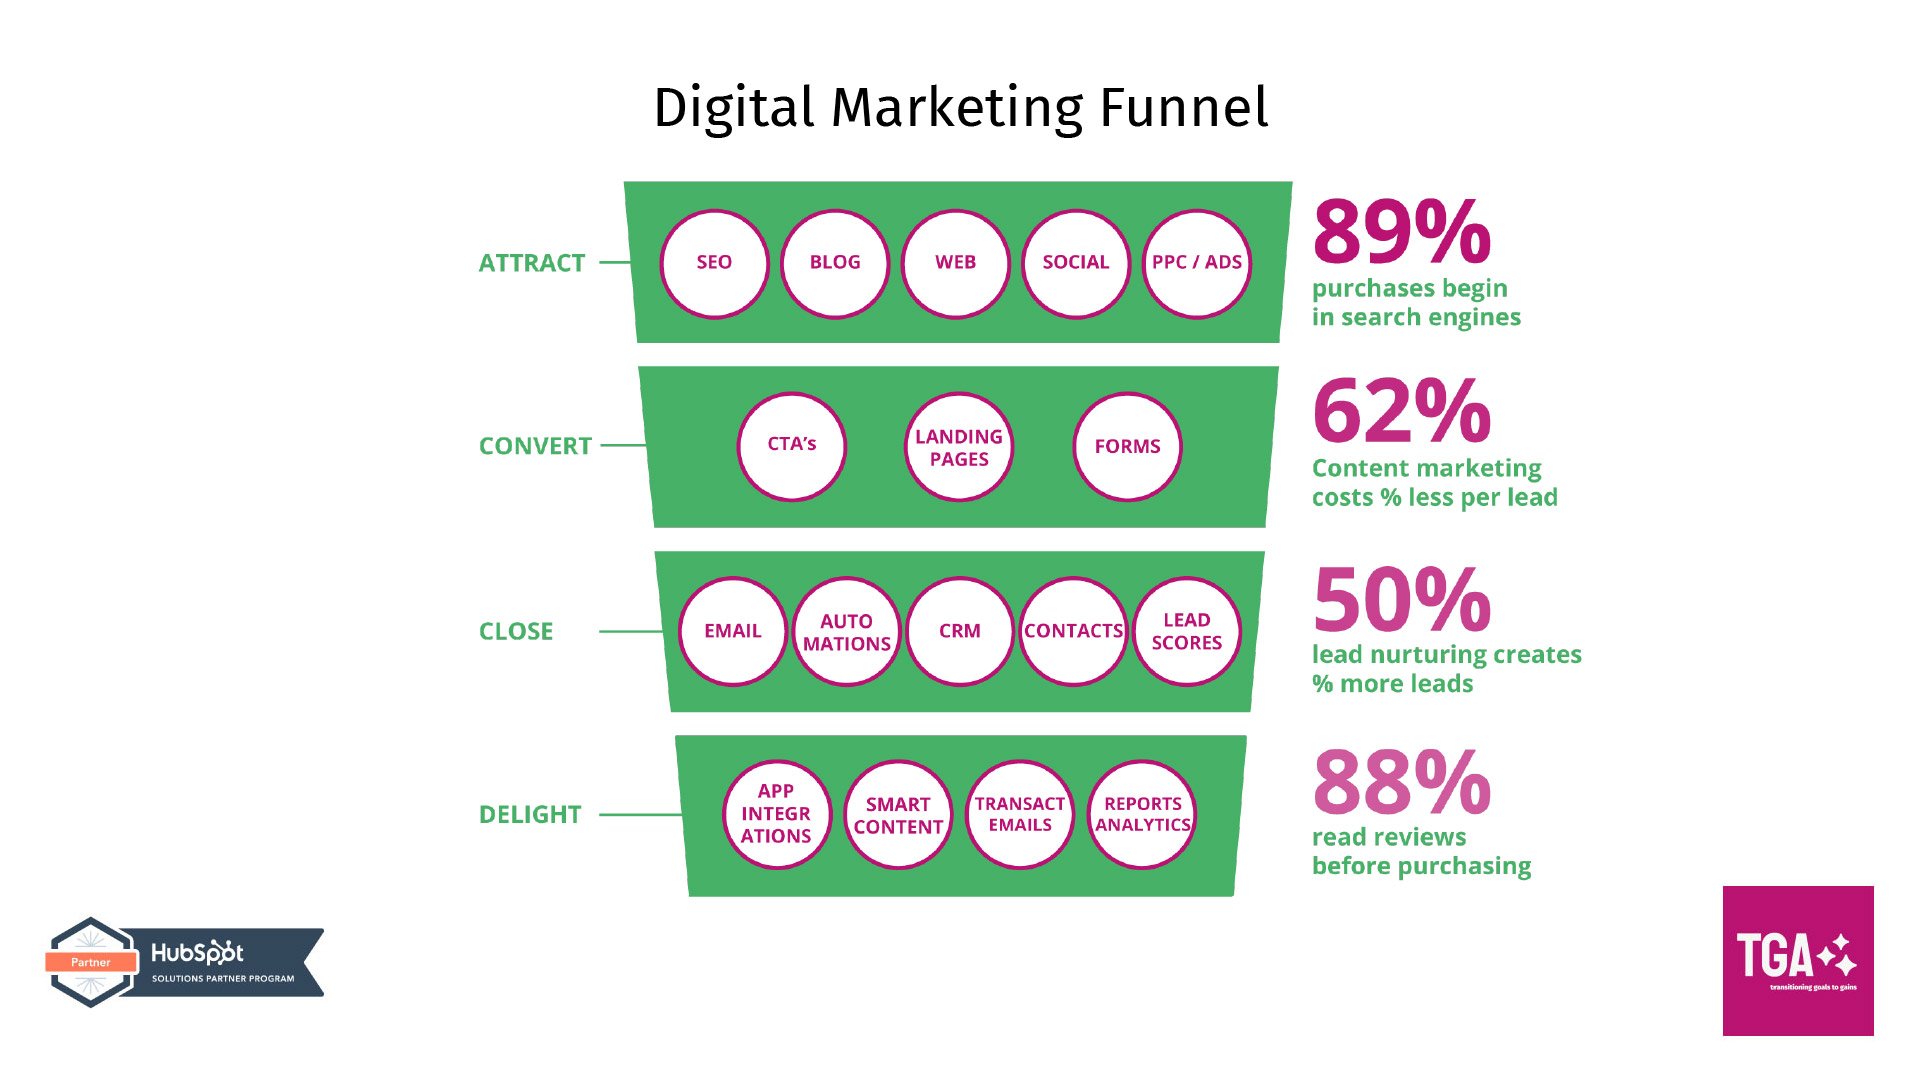 TGA---Digital-Marketing-Funnel